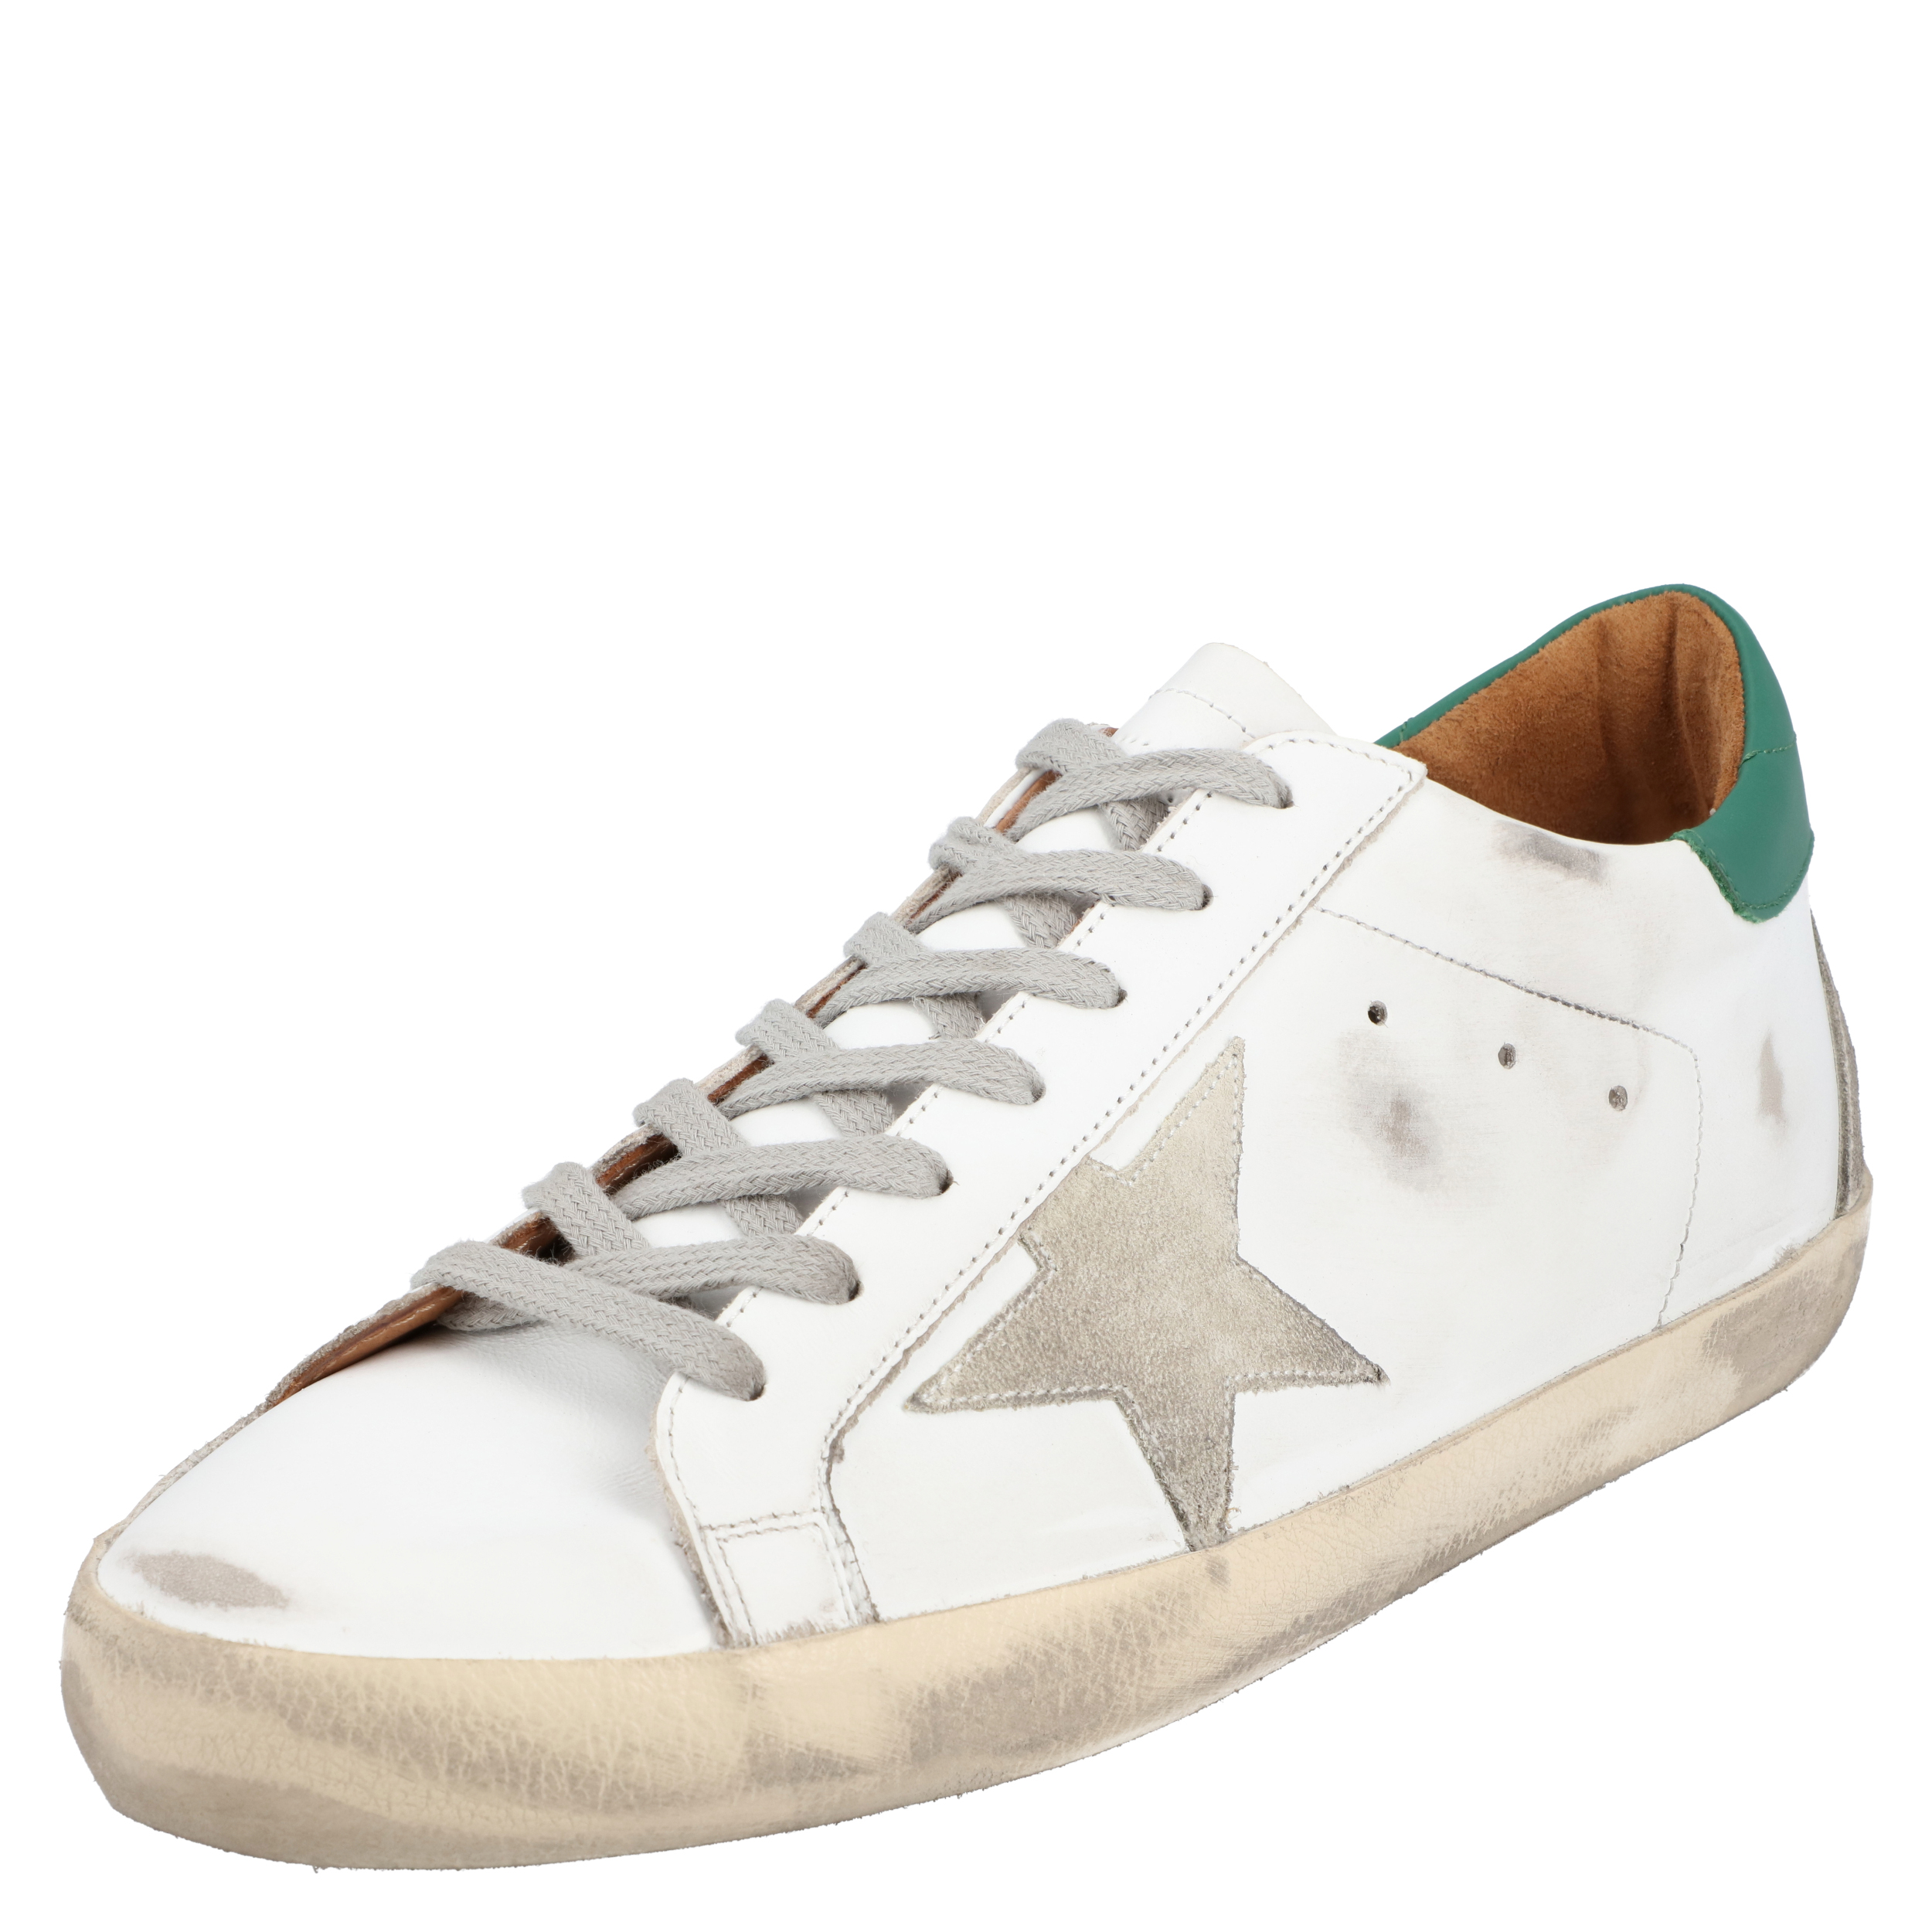 Golden Goose White Leather Sneaker Size EU 41